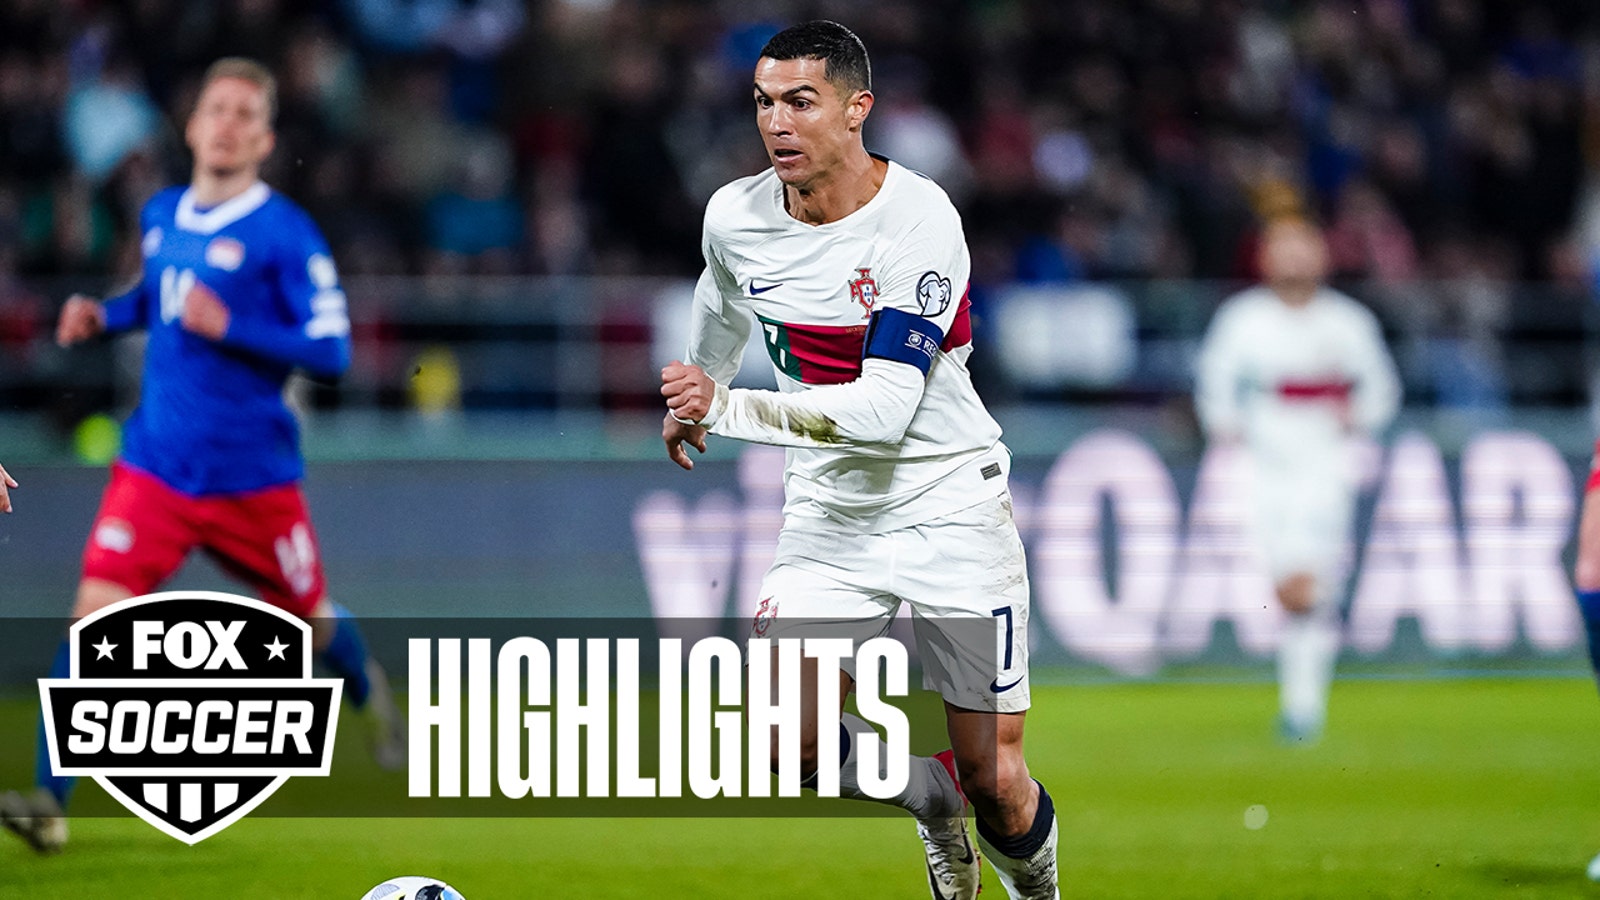 Cristiano Ronaldo scores in 46' to give Portugal a 1-0 lead vs. Liechtenstein